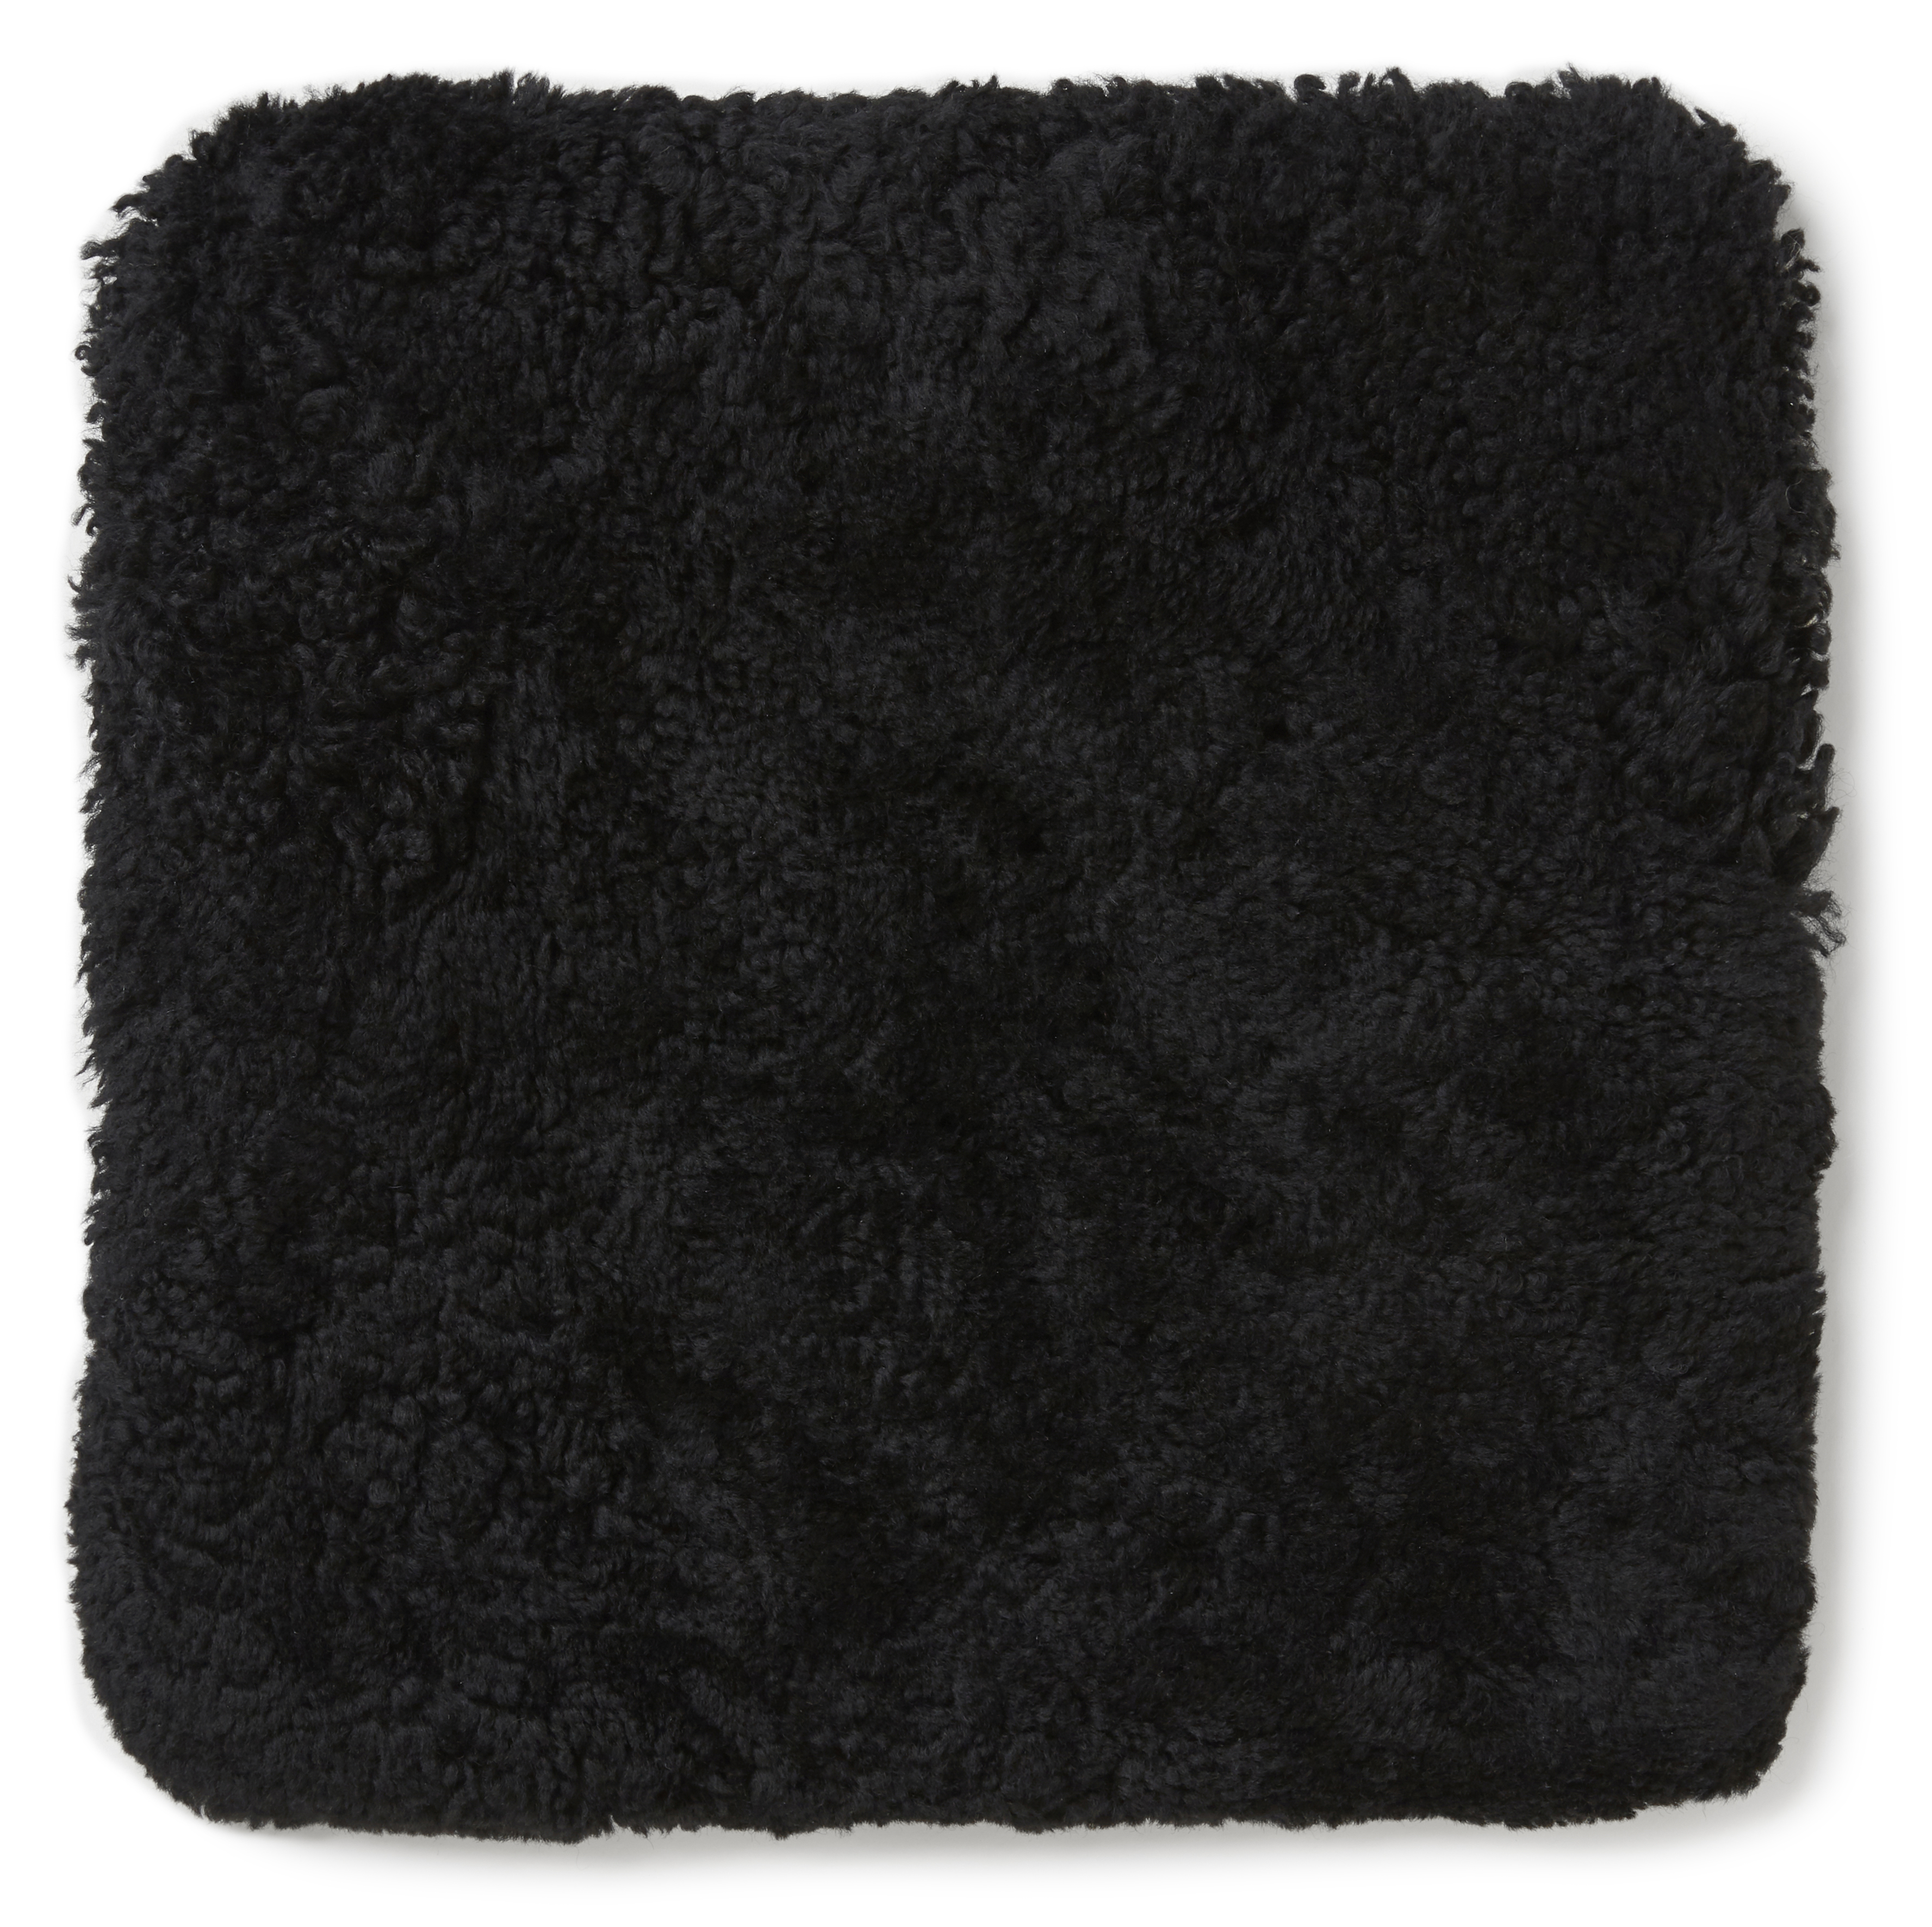 Curly Seat Cover Sheepskin 40x40cm Black